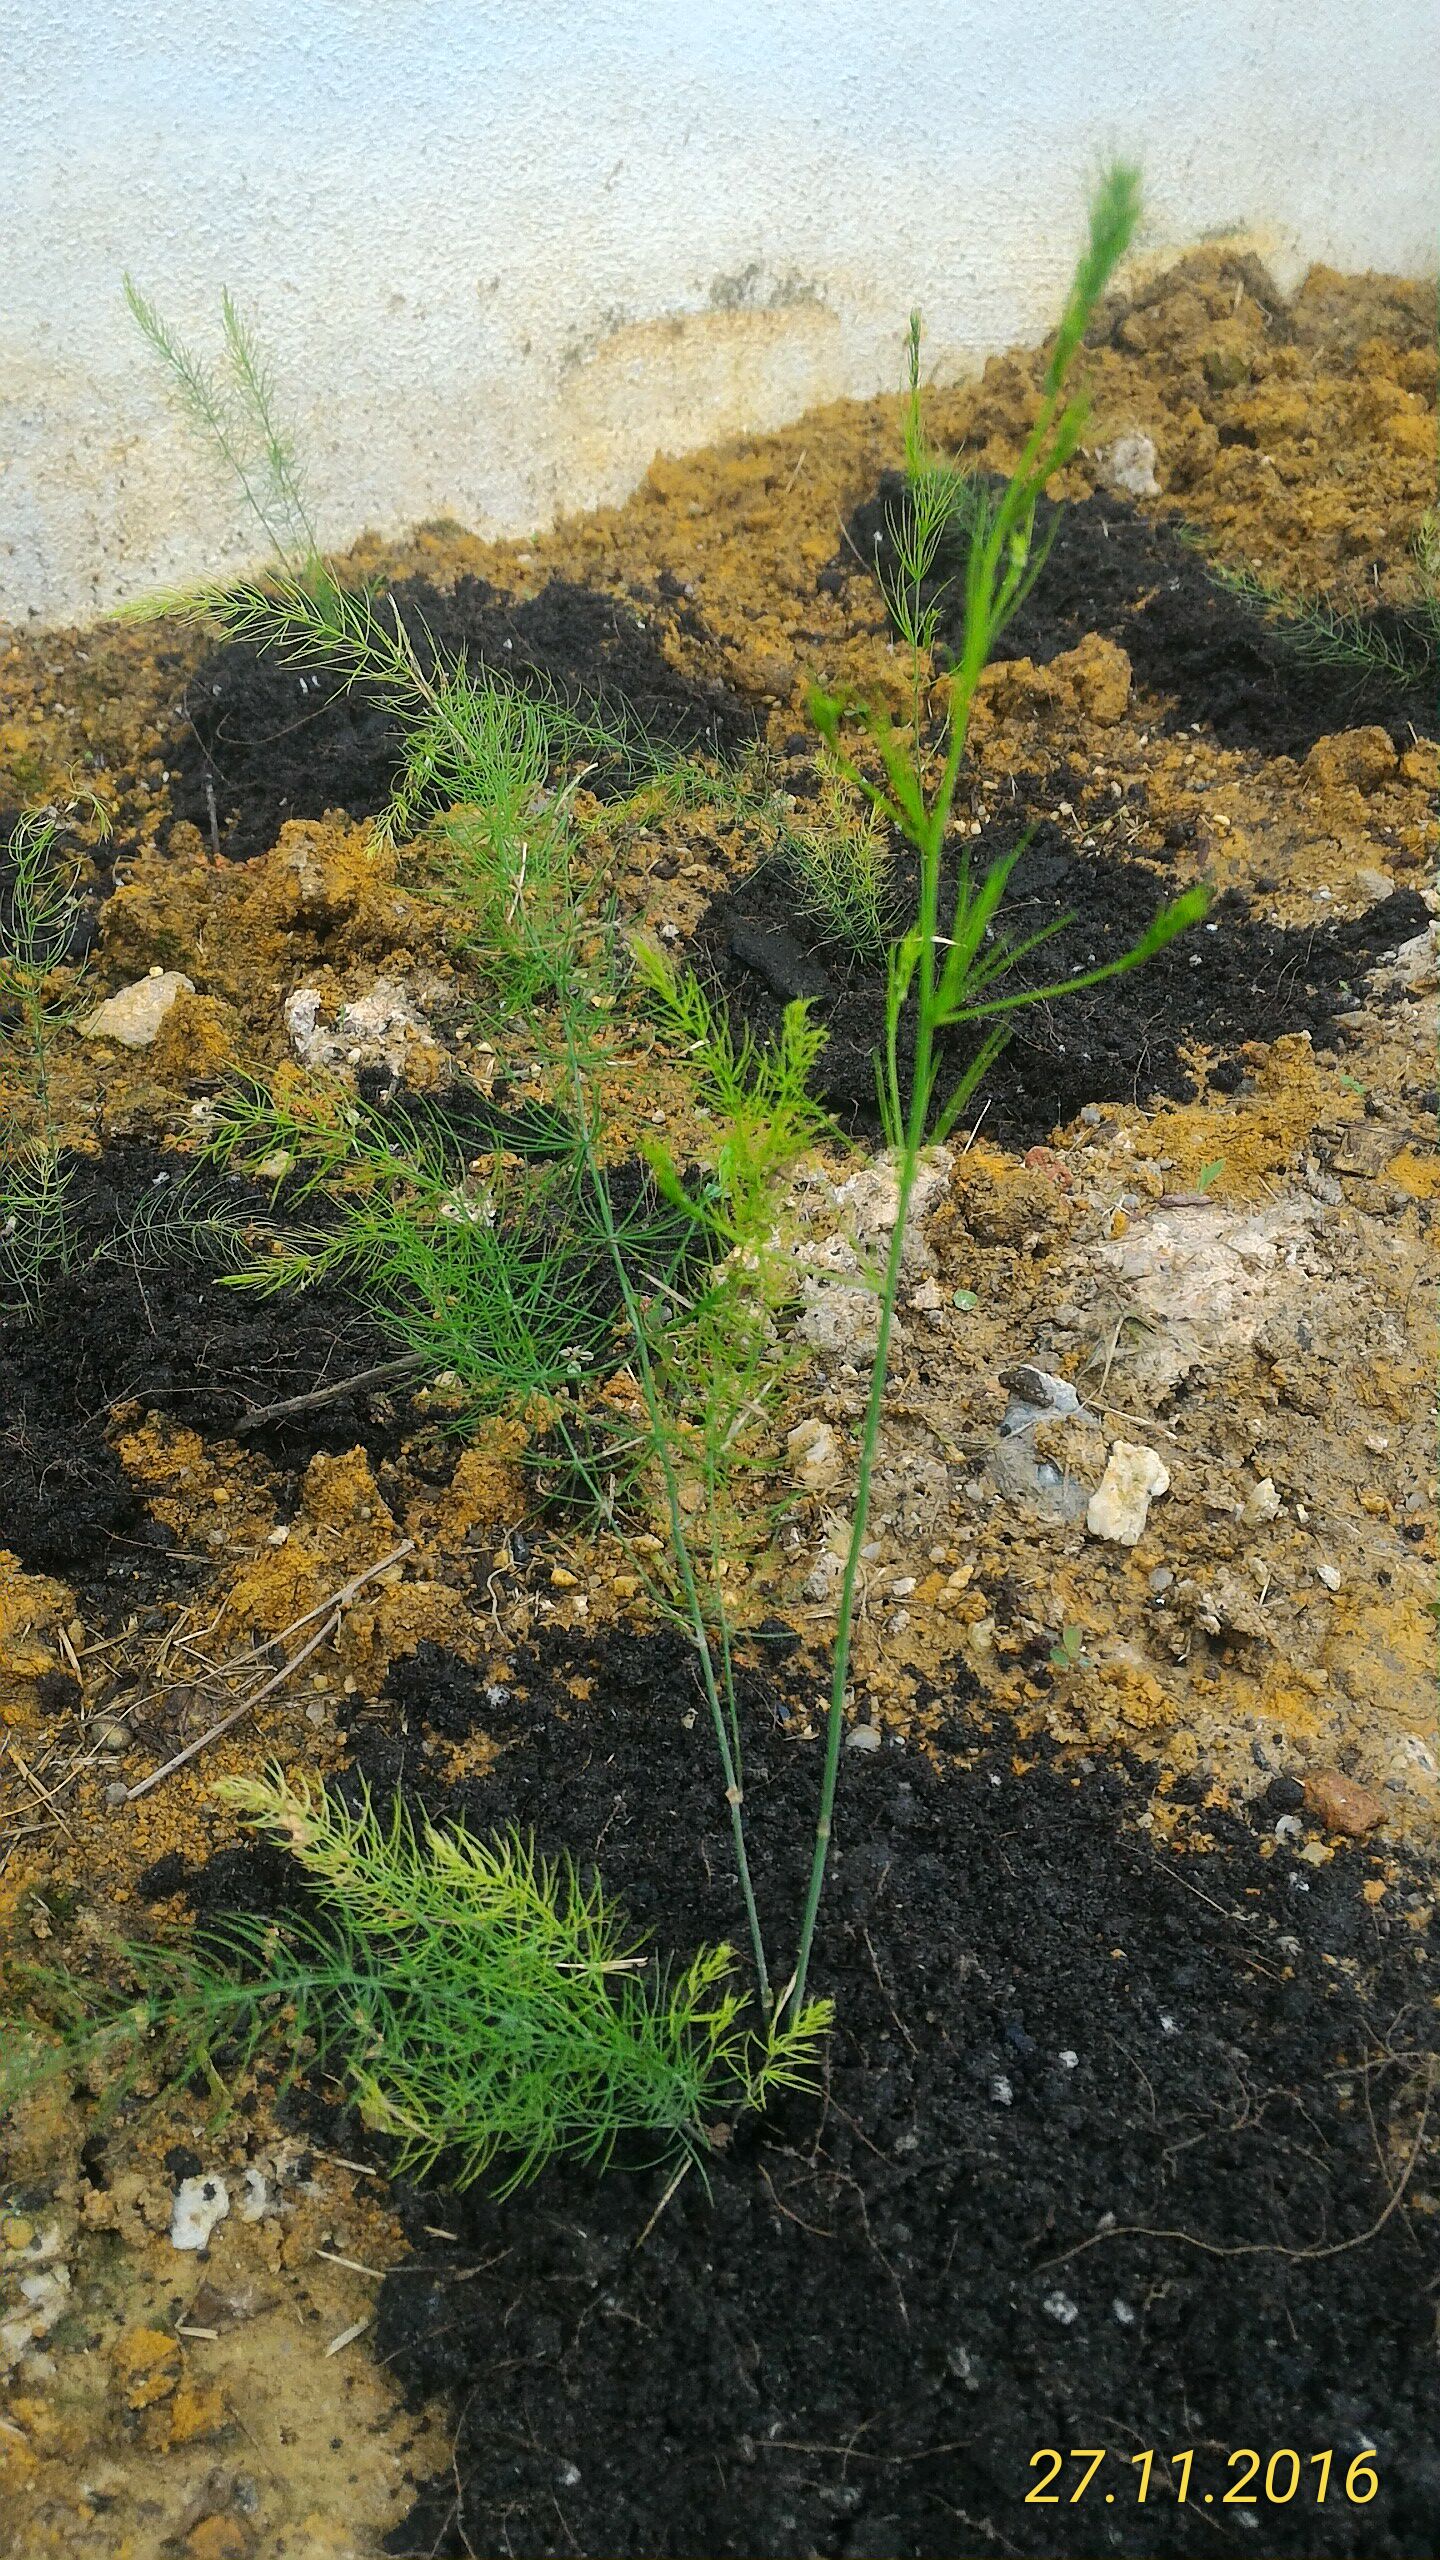 Anak anak pokok asparagus yang baru berumur sebulan lebih.